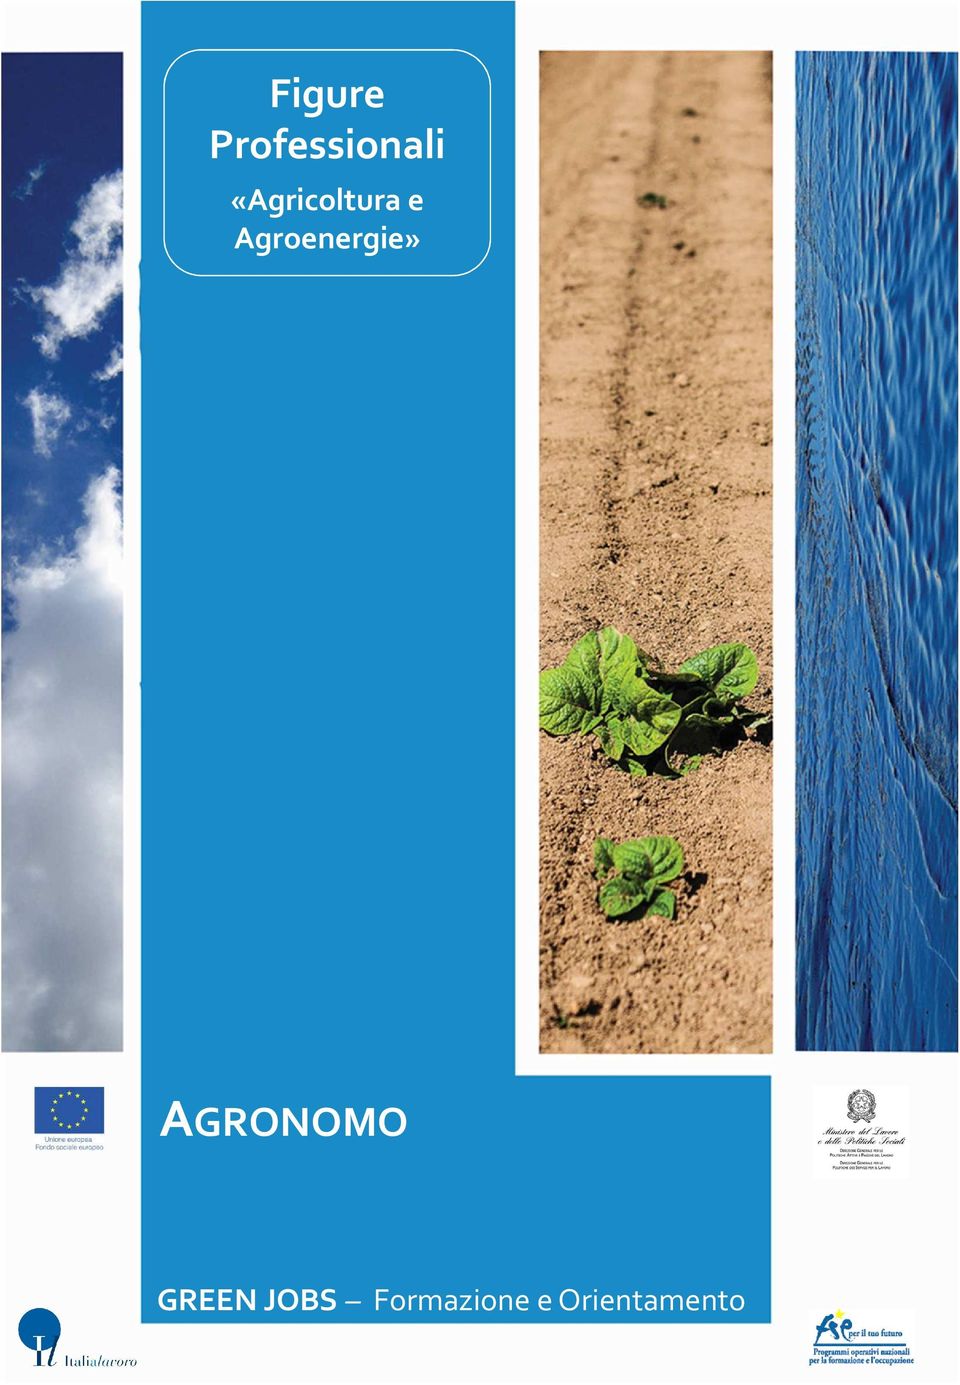 Agroenergie» AGRONOMO